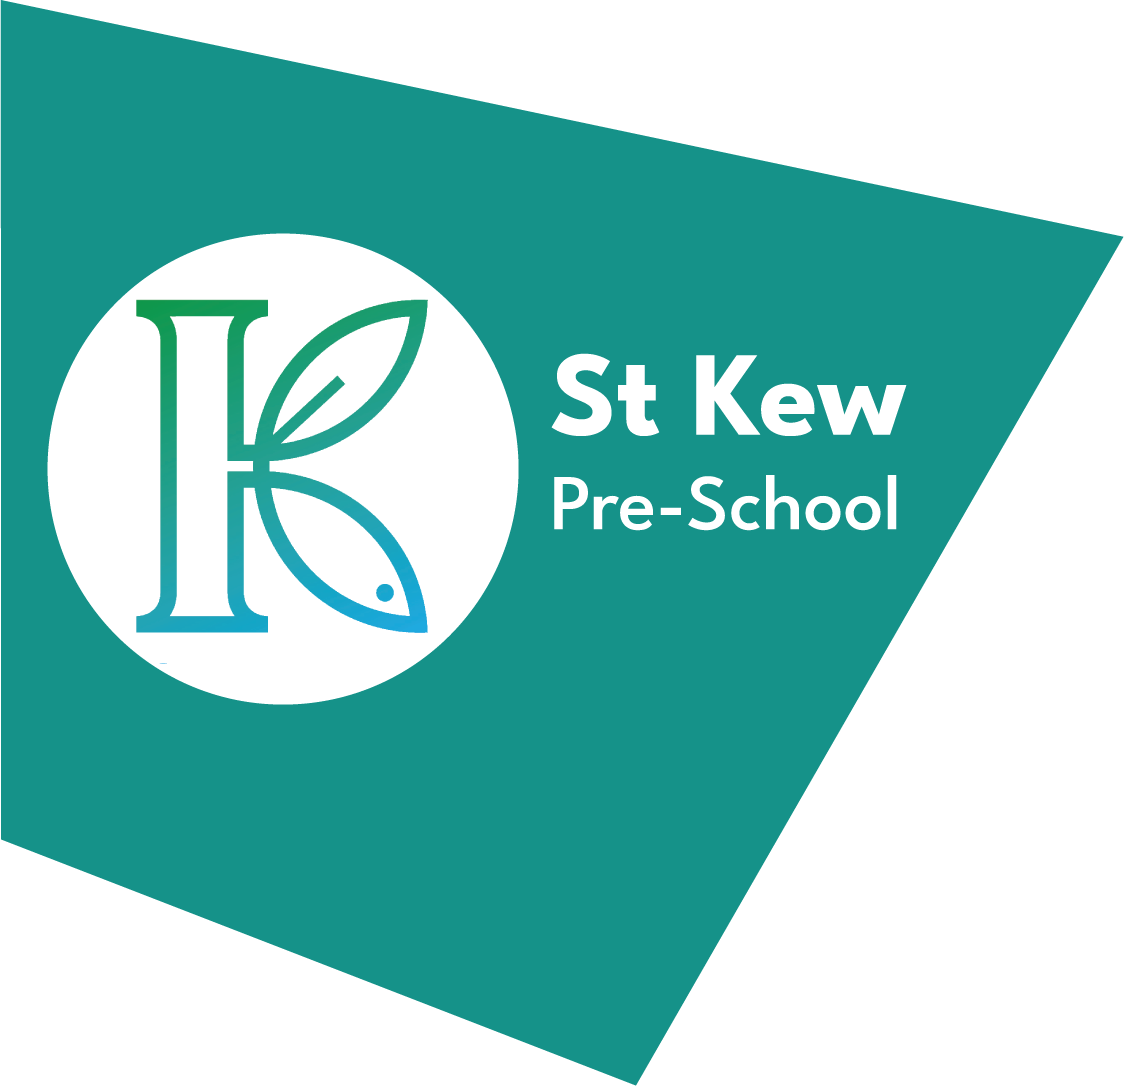 St Kew Academy